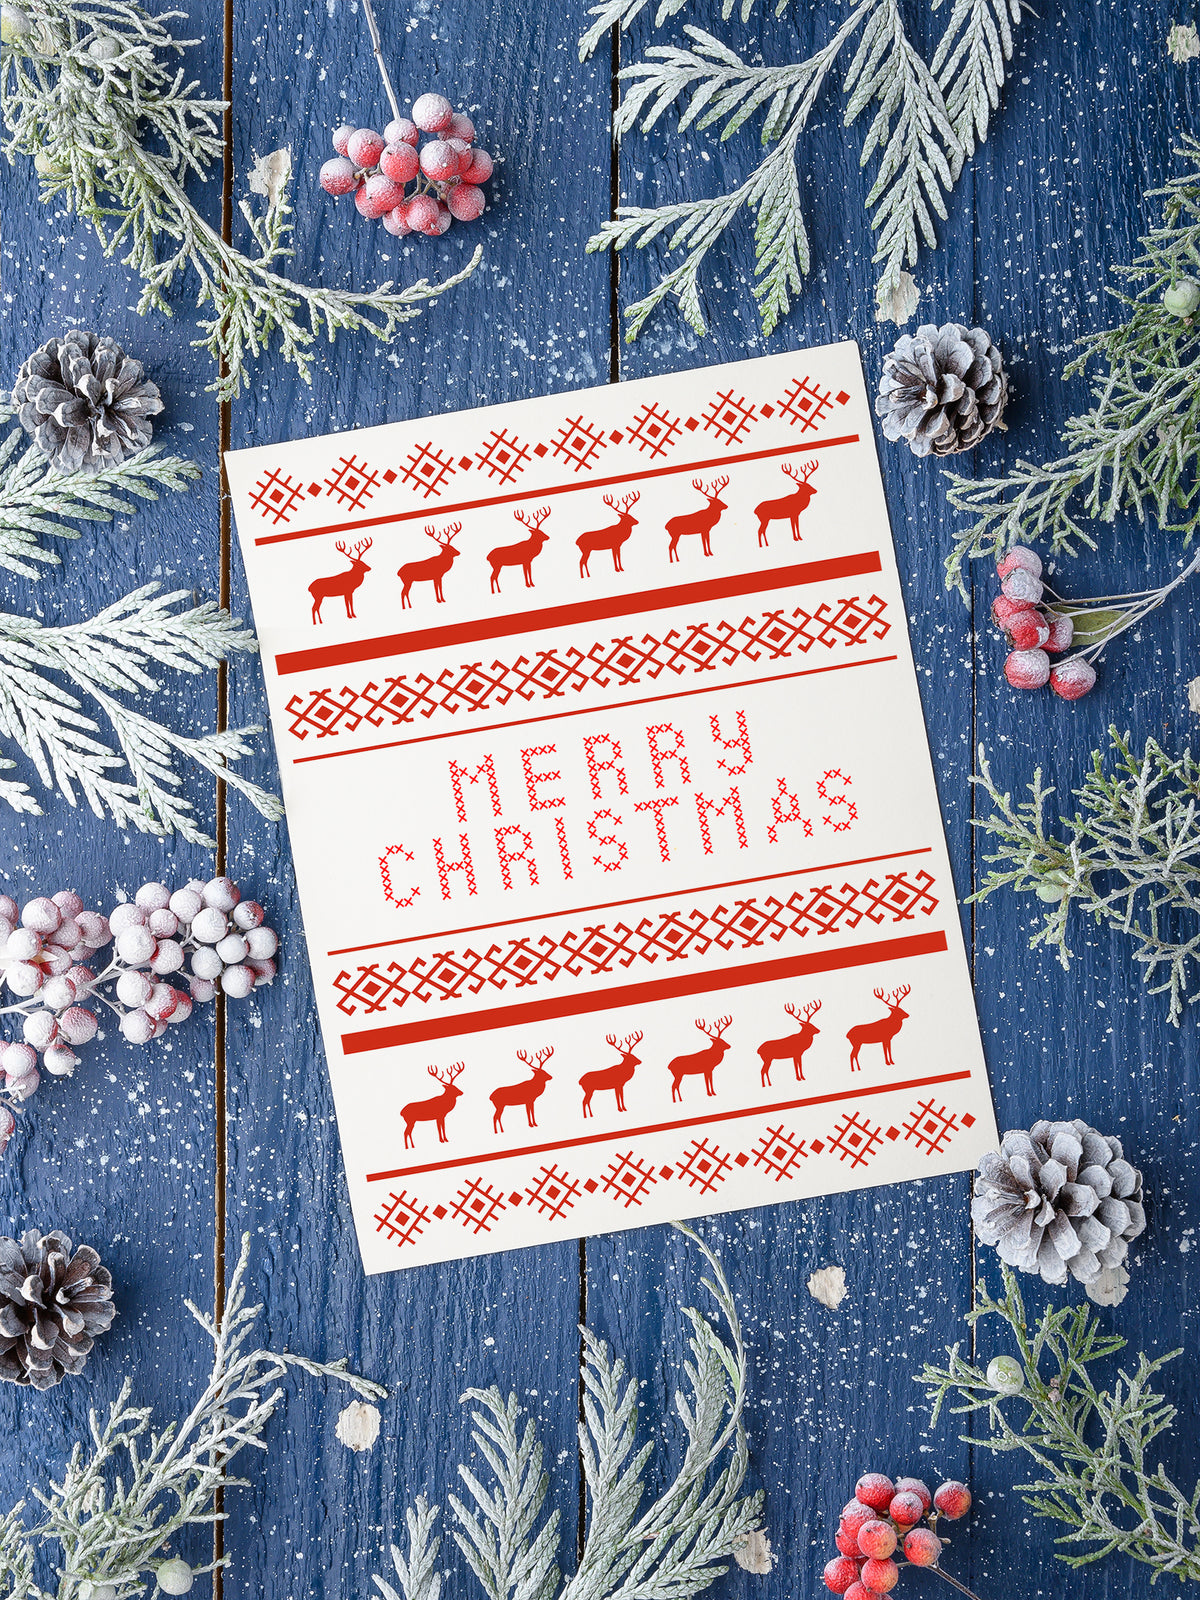 Merry Christmas Nordic Red Print Card Set,Holiday Chrismas Cards,Handmade Holiday Greeting Cards,Holiday Season Greetings Card,Made in USA